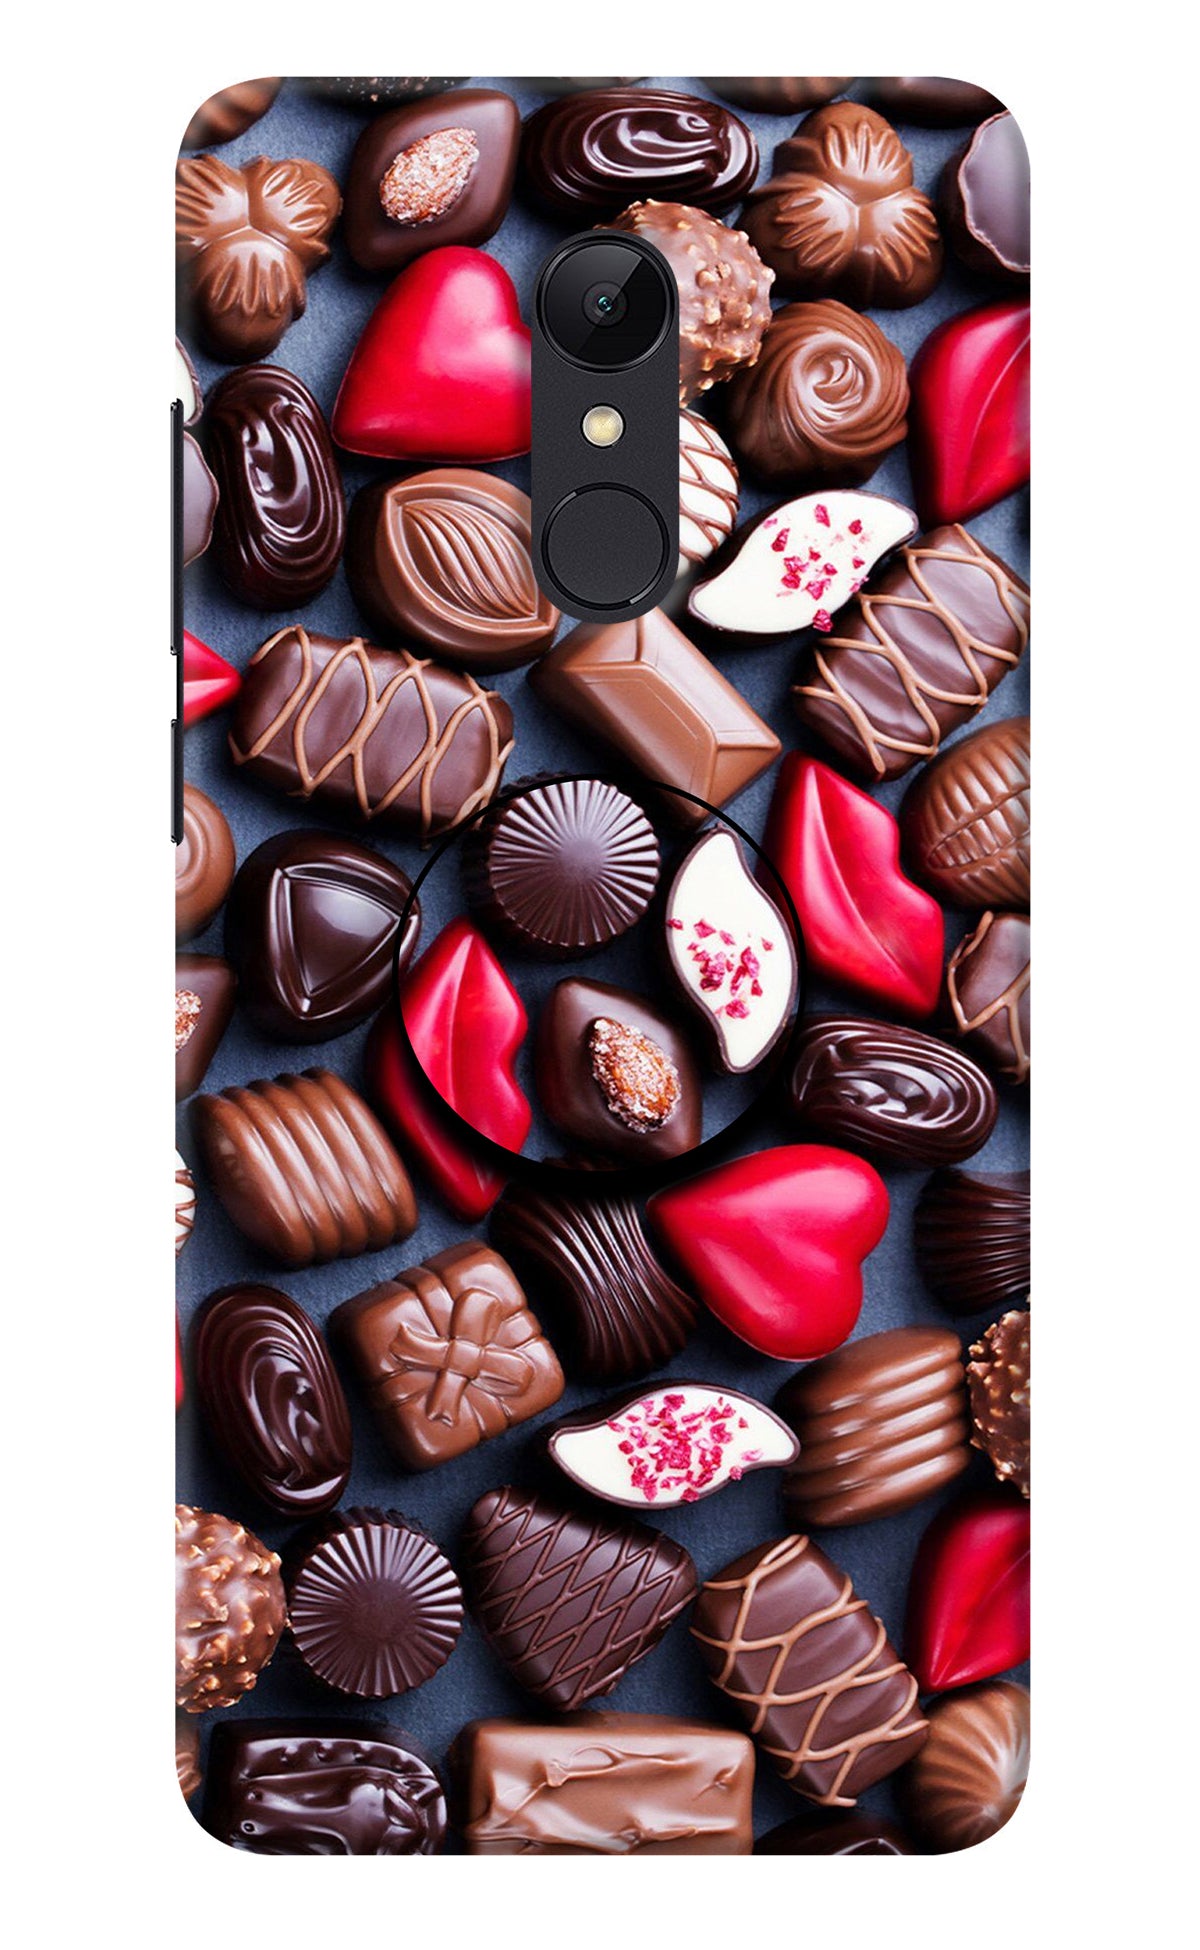 Chocolates Redmi Note 4 Pop Case